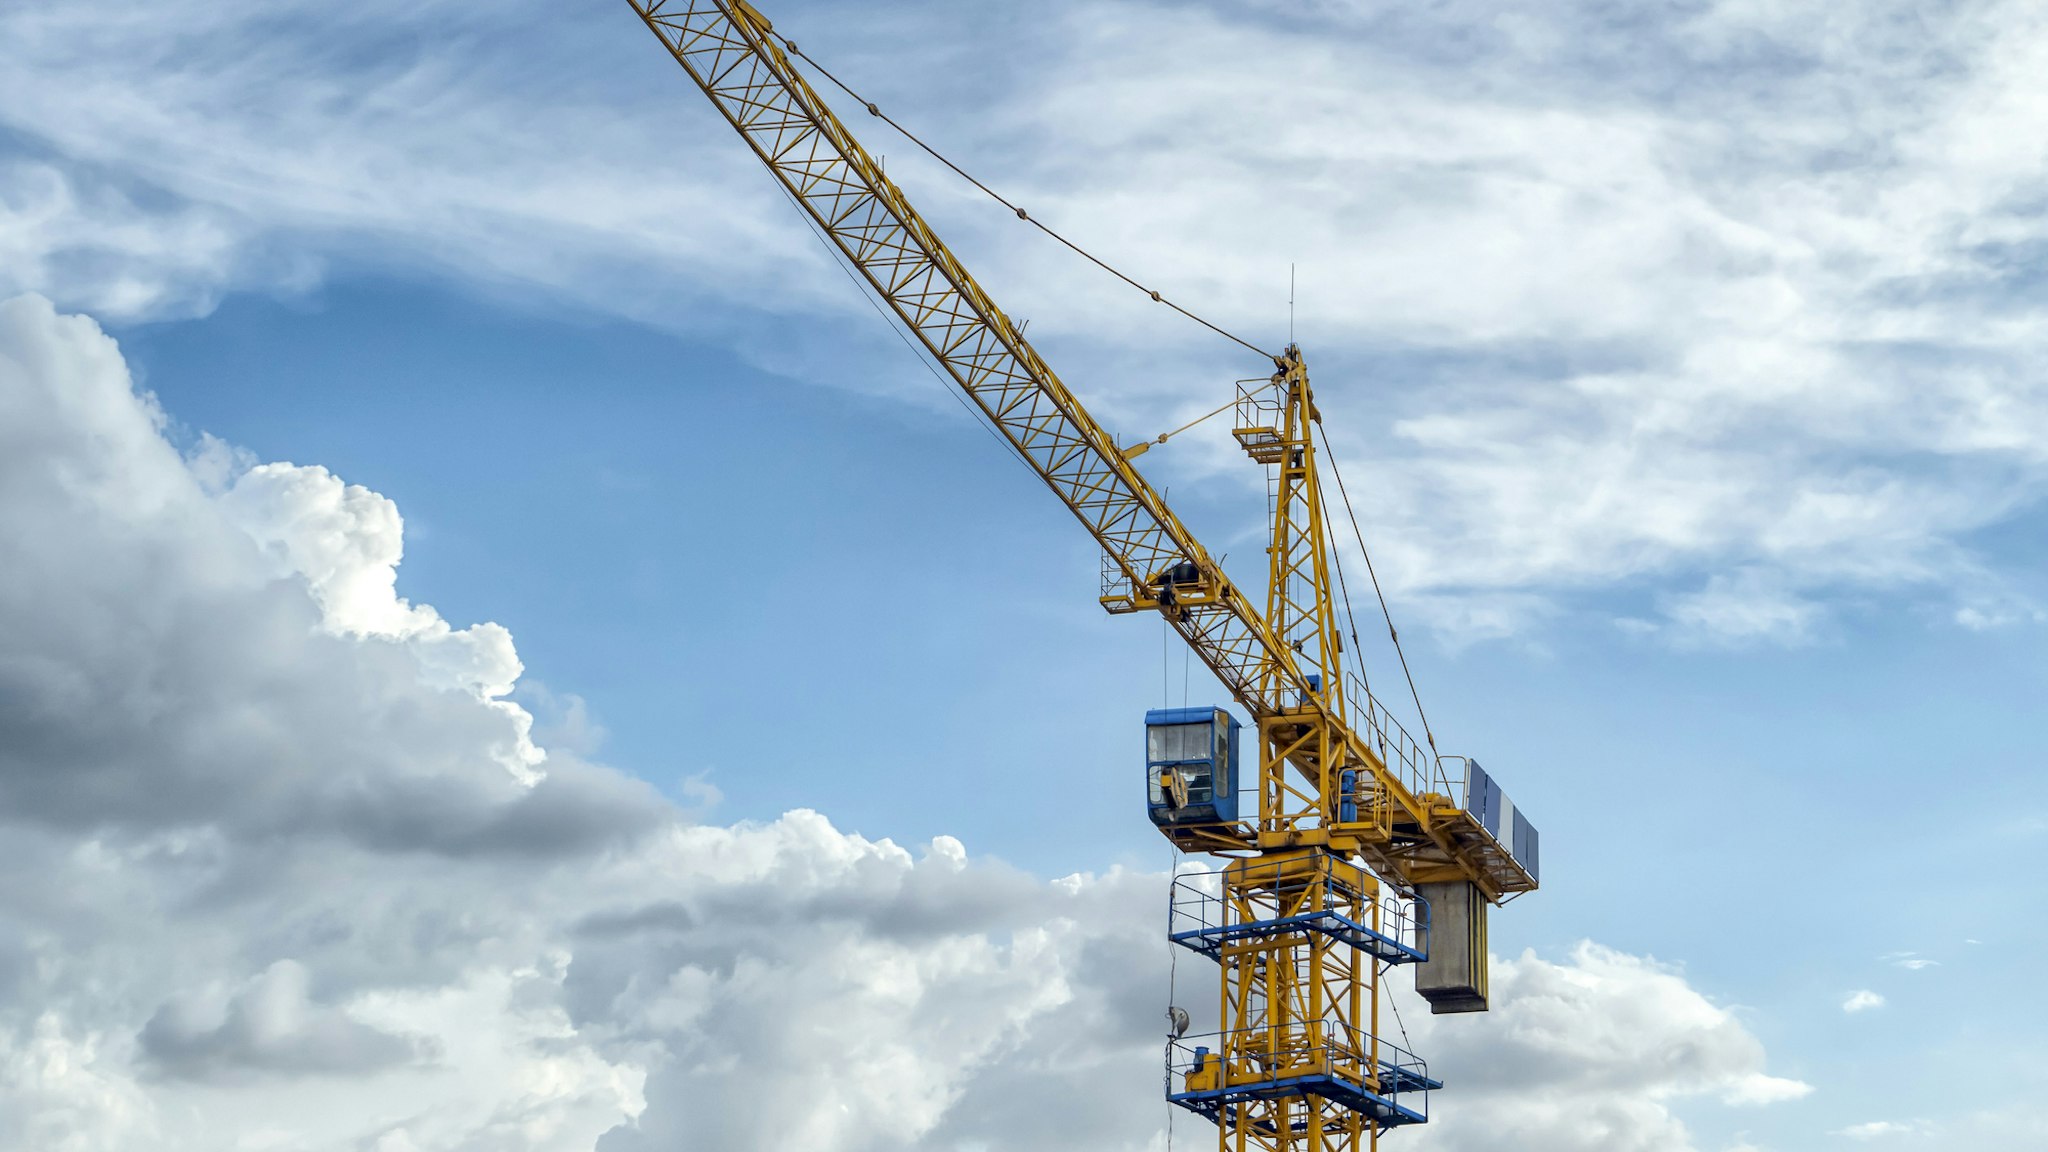 Crane on construction site - stock photo